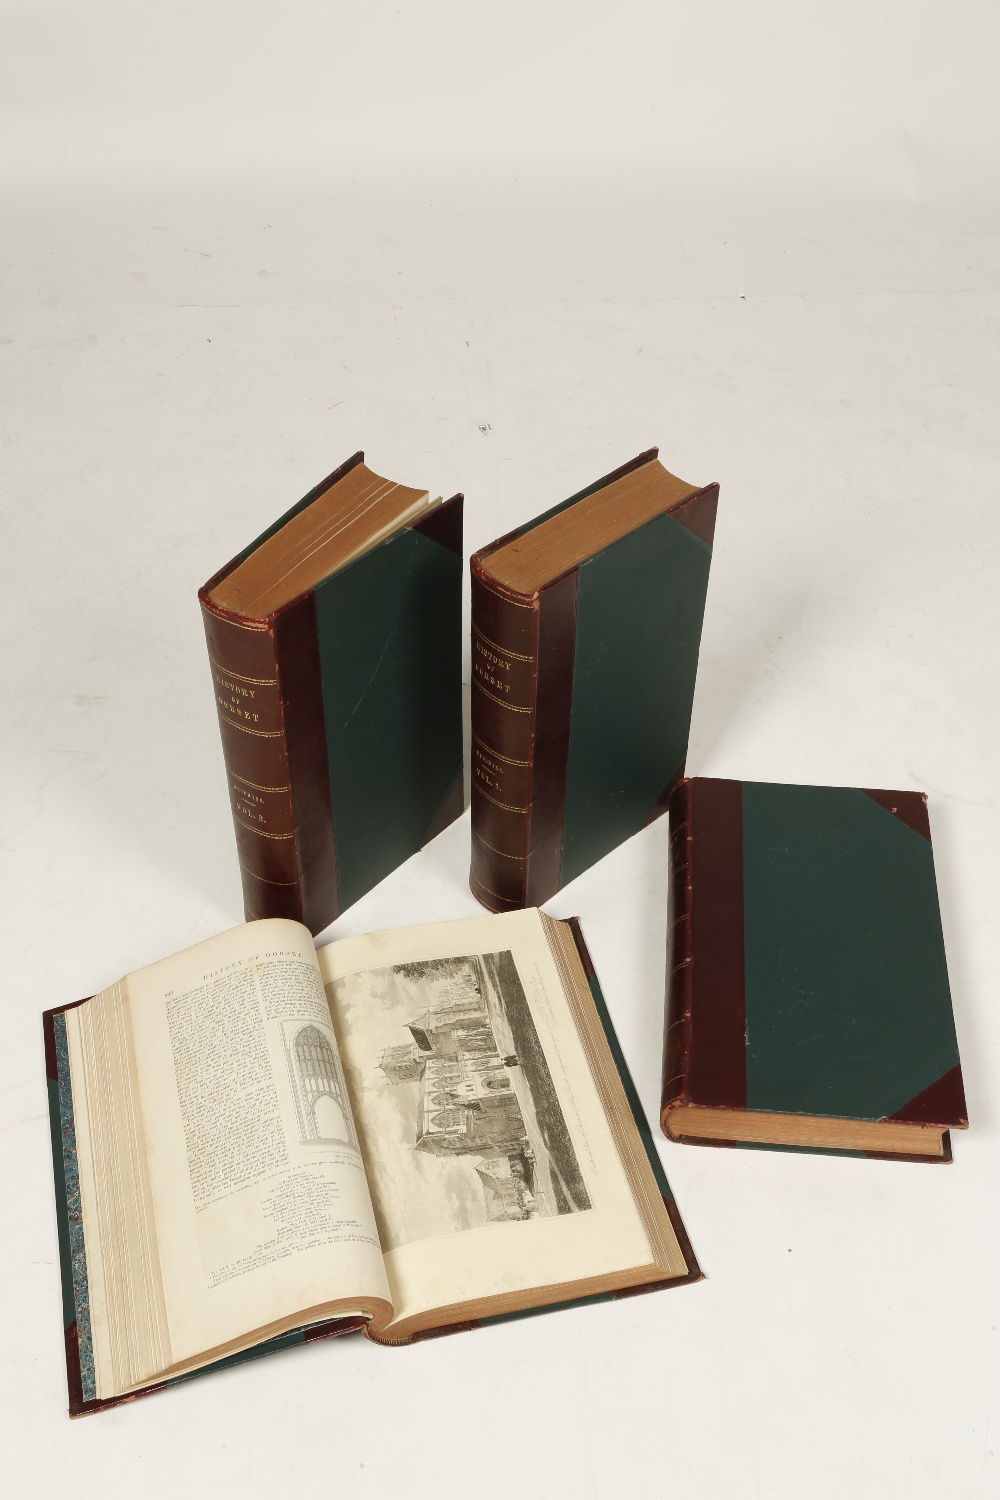 HUTCHINGS: "HISTORY OF DORSET", 4vols, 3rd edition, printed by John Bowyer Nichols & Sons, 25